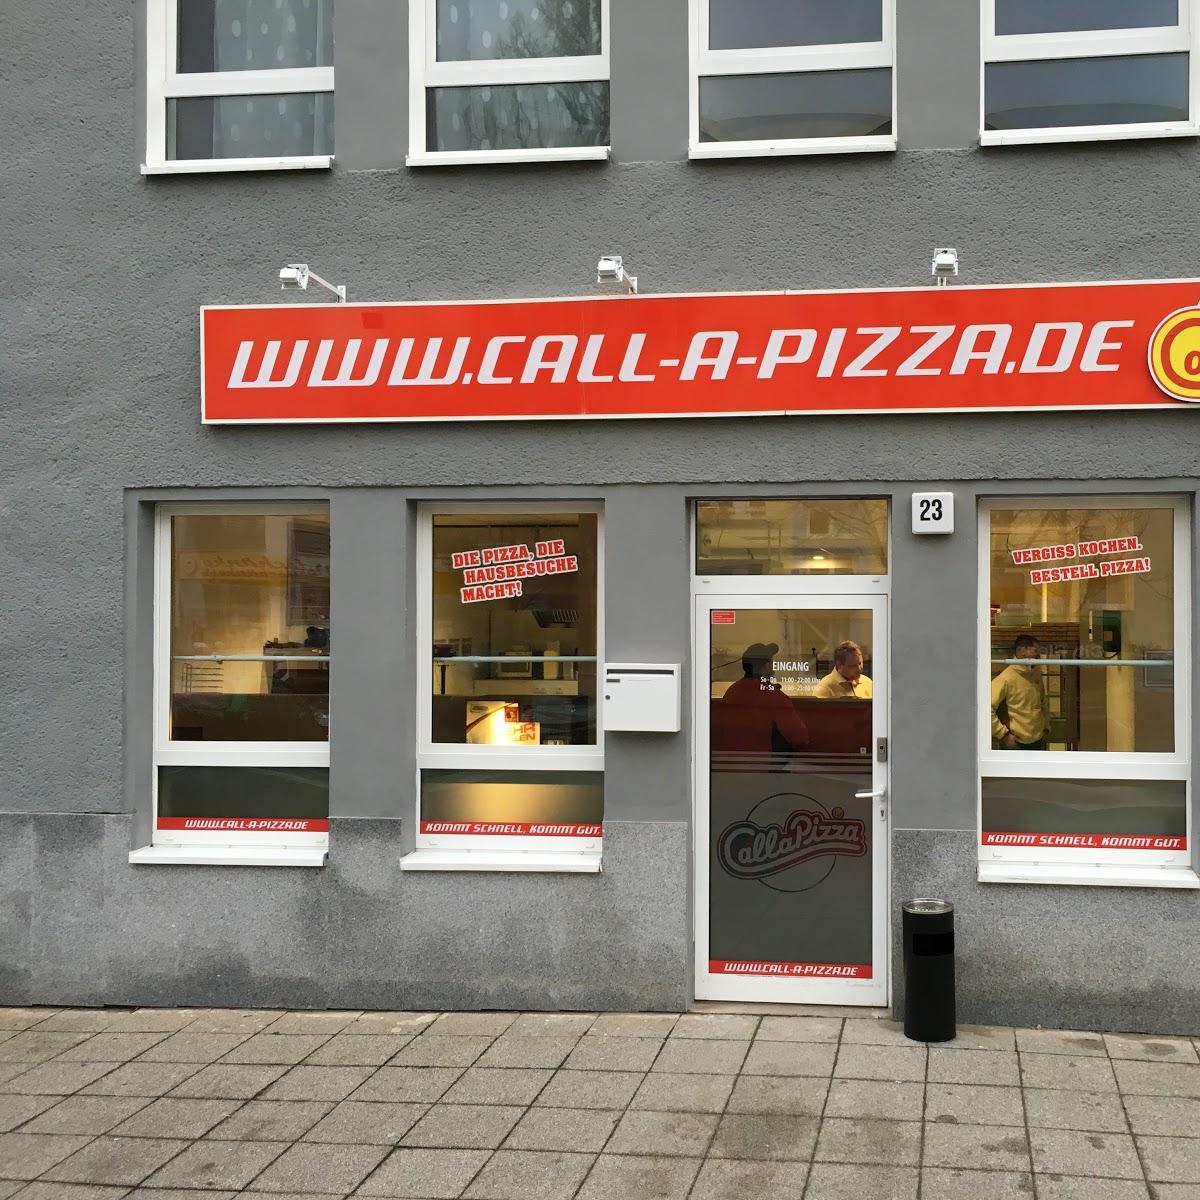 Restaurant "Call a Pizza" in Hennigsdorf